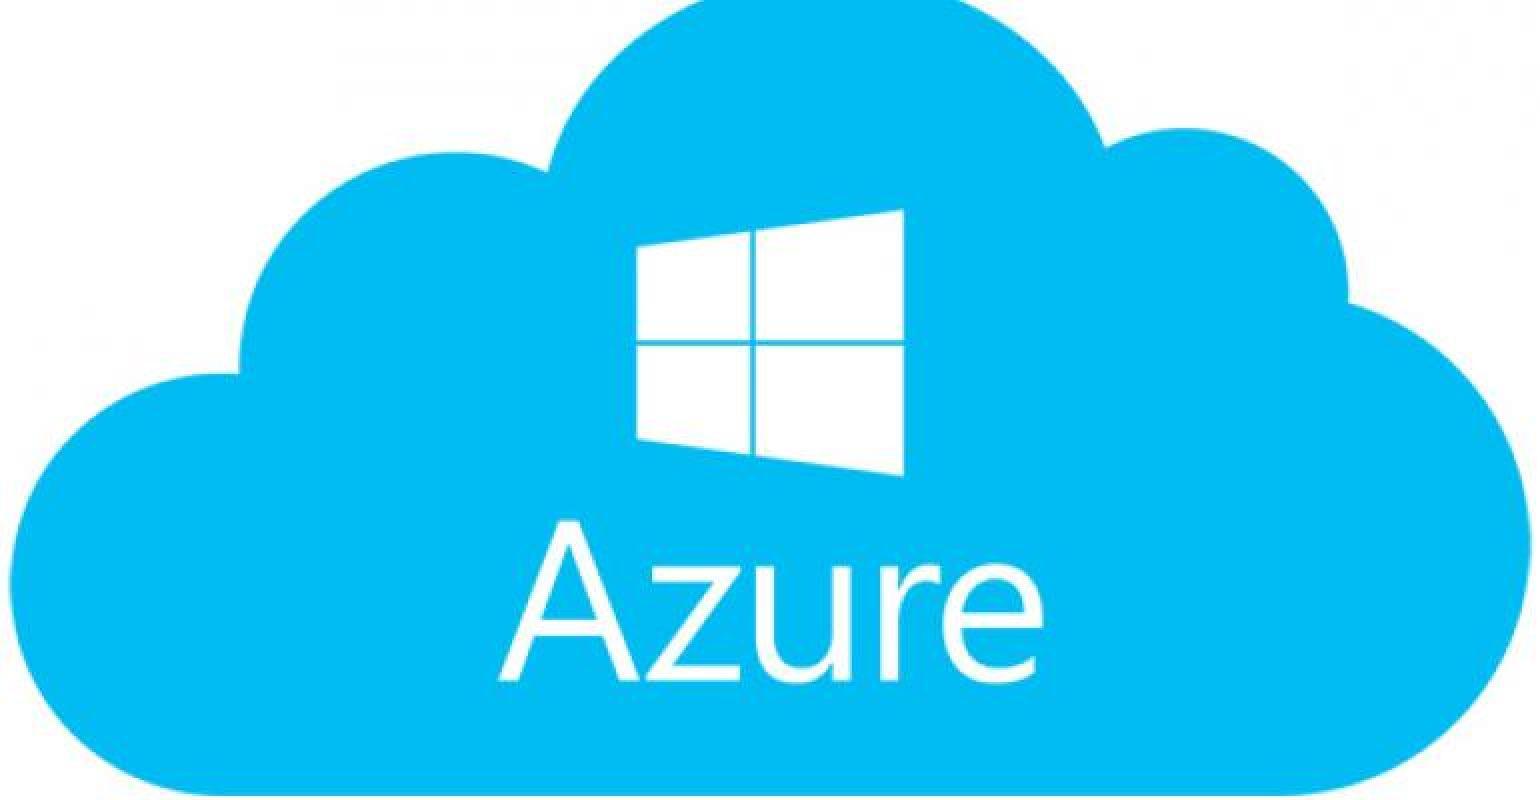 Microsoft Azure training for Beginners in Anchorage | Microsoft Azure Fundamentals | Azure cloud computing training | Microsoft Azure Fundamentals AZ-900 Certification Exam Prep (Preparation) Training Course